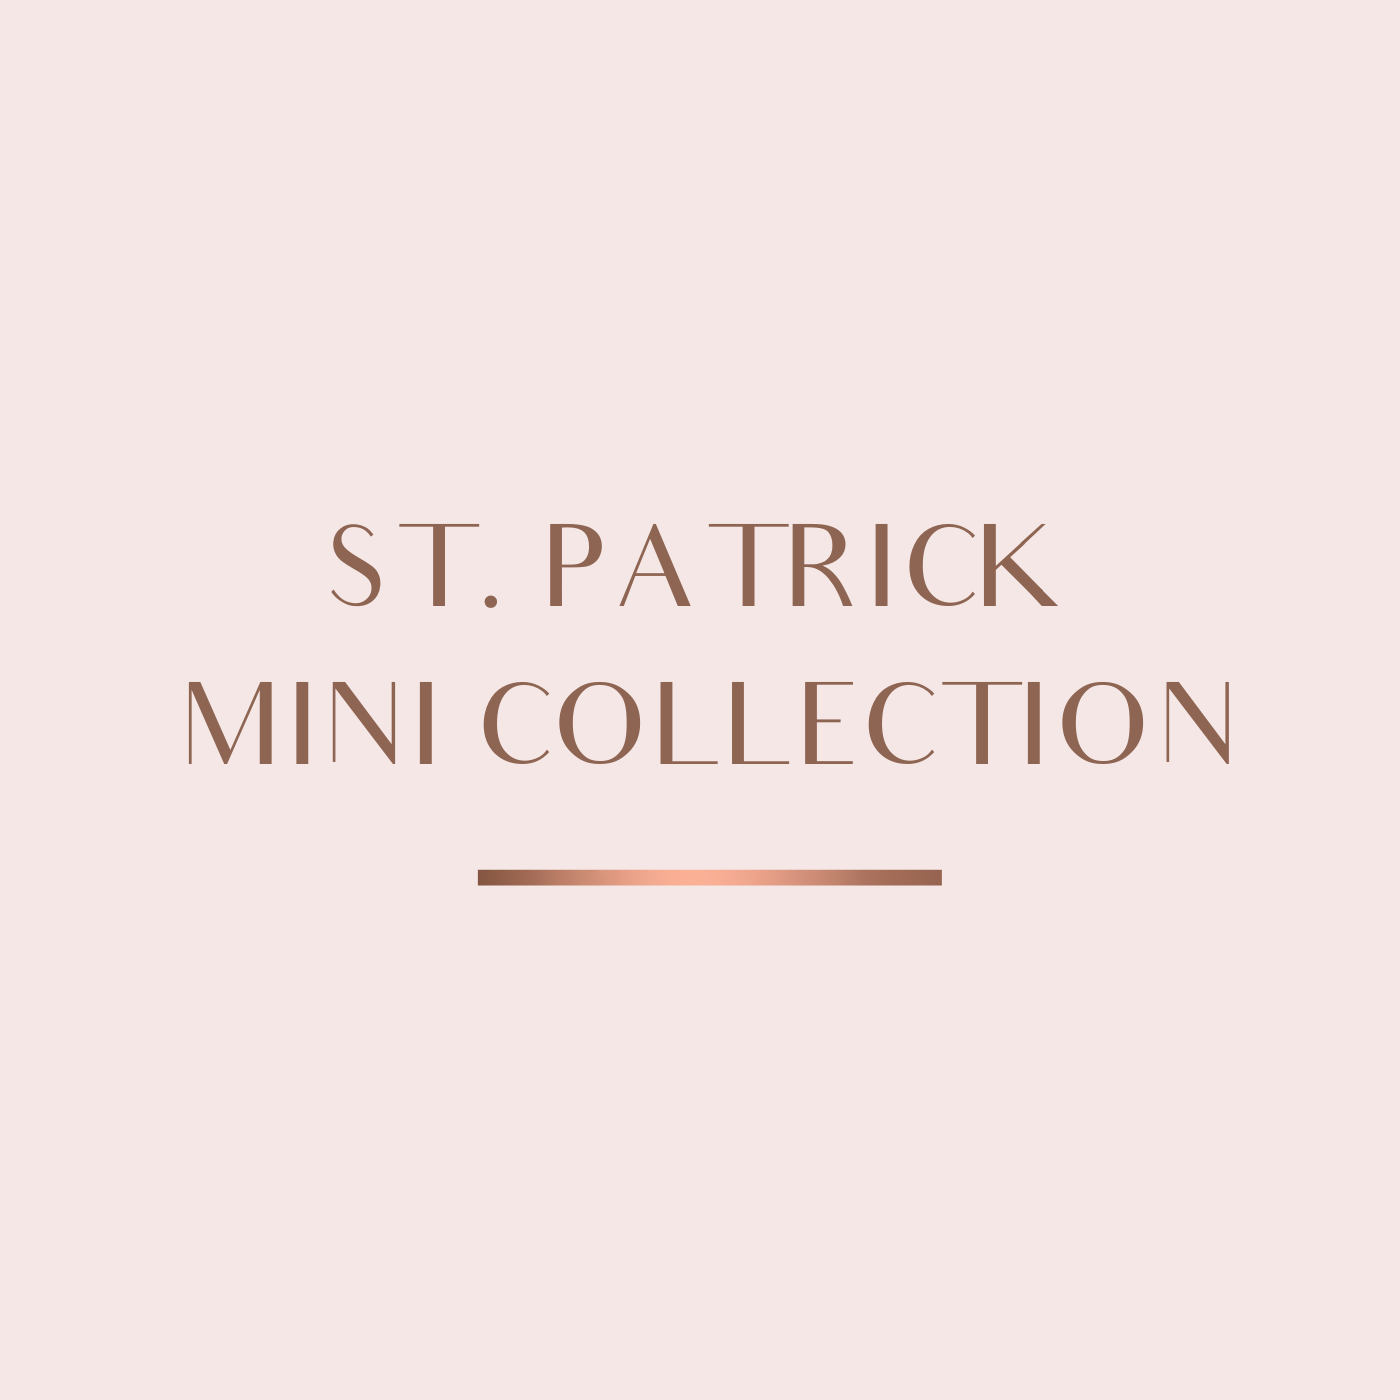 ST. PATRICK MINI COLLECTION